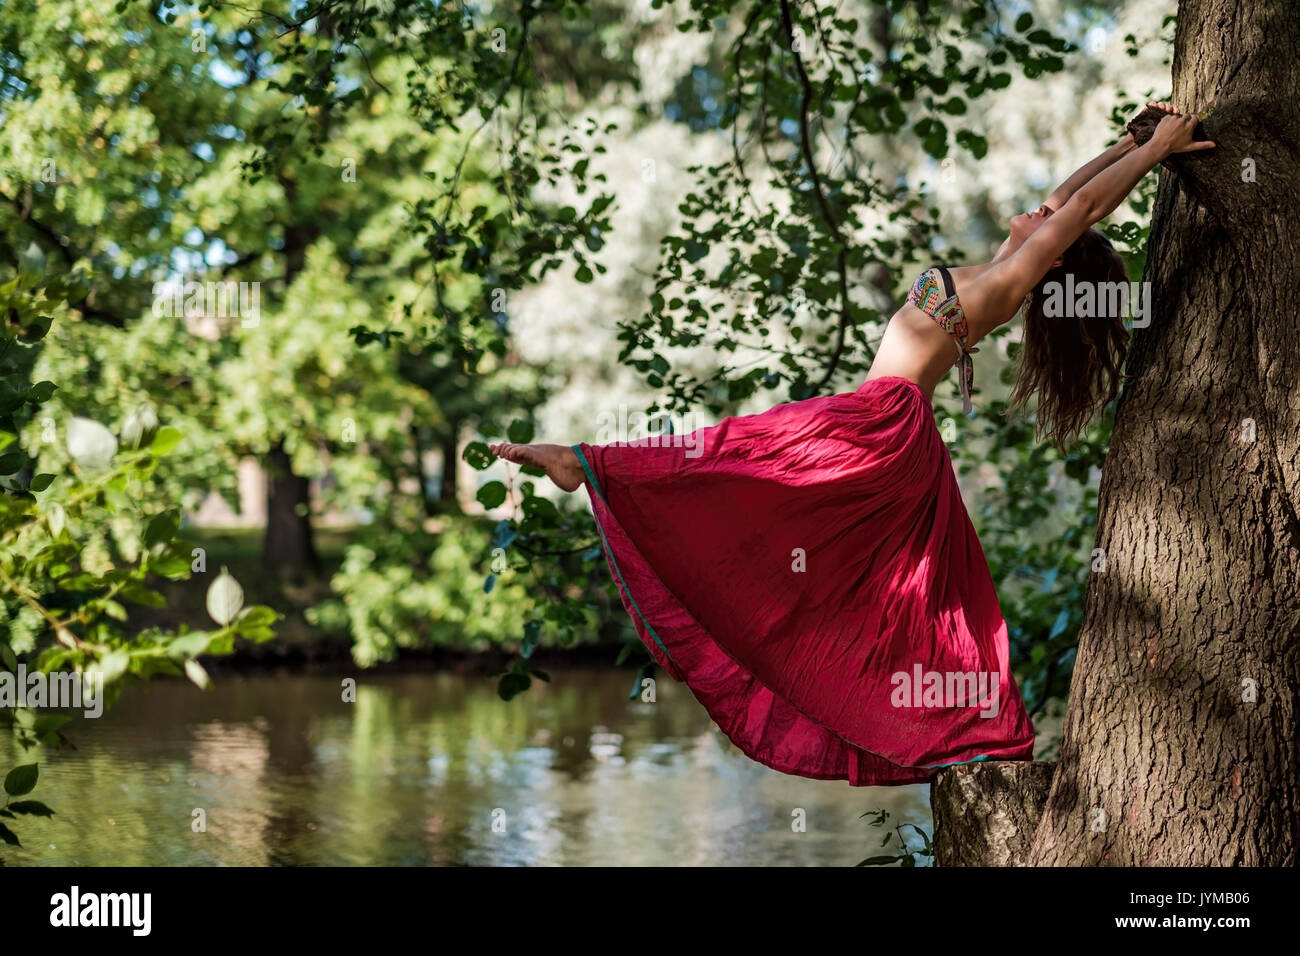 Caucasian woman in forest holding tree doing yoga asana Stock Photo